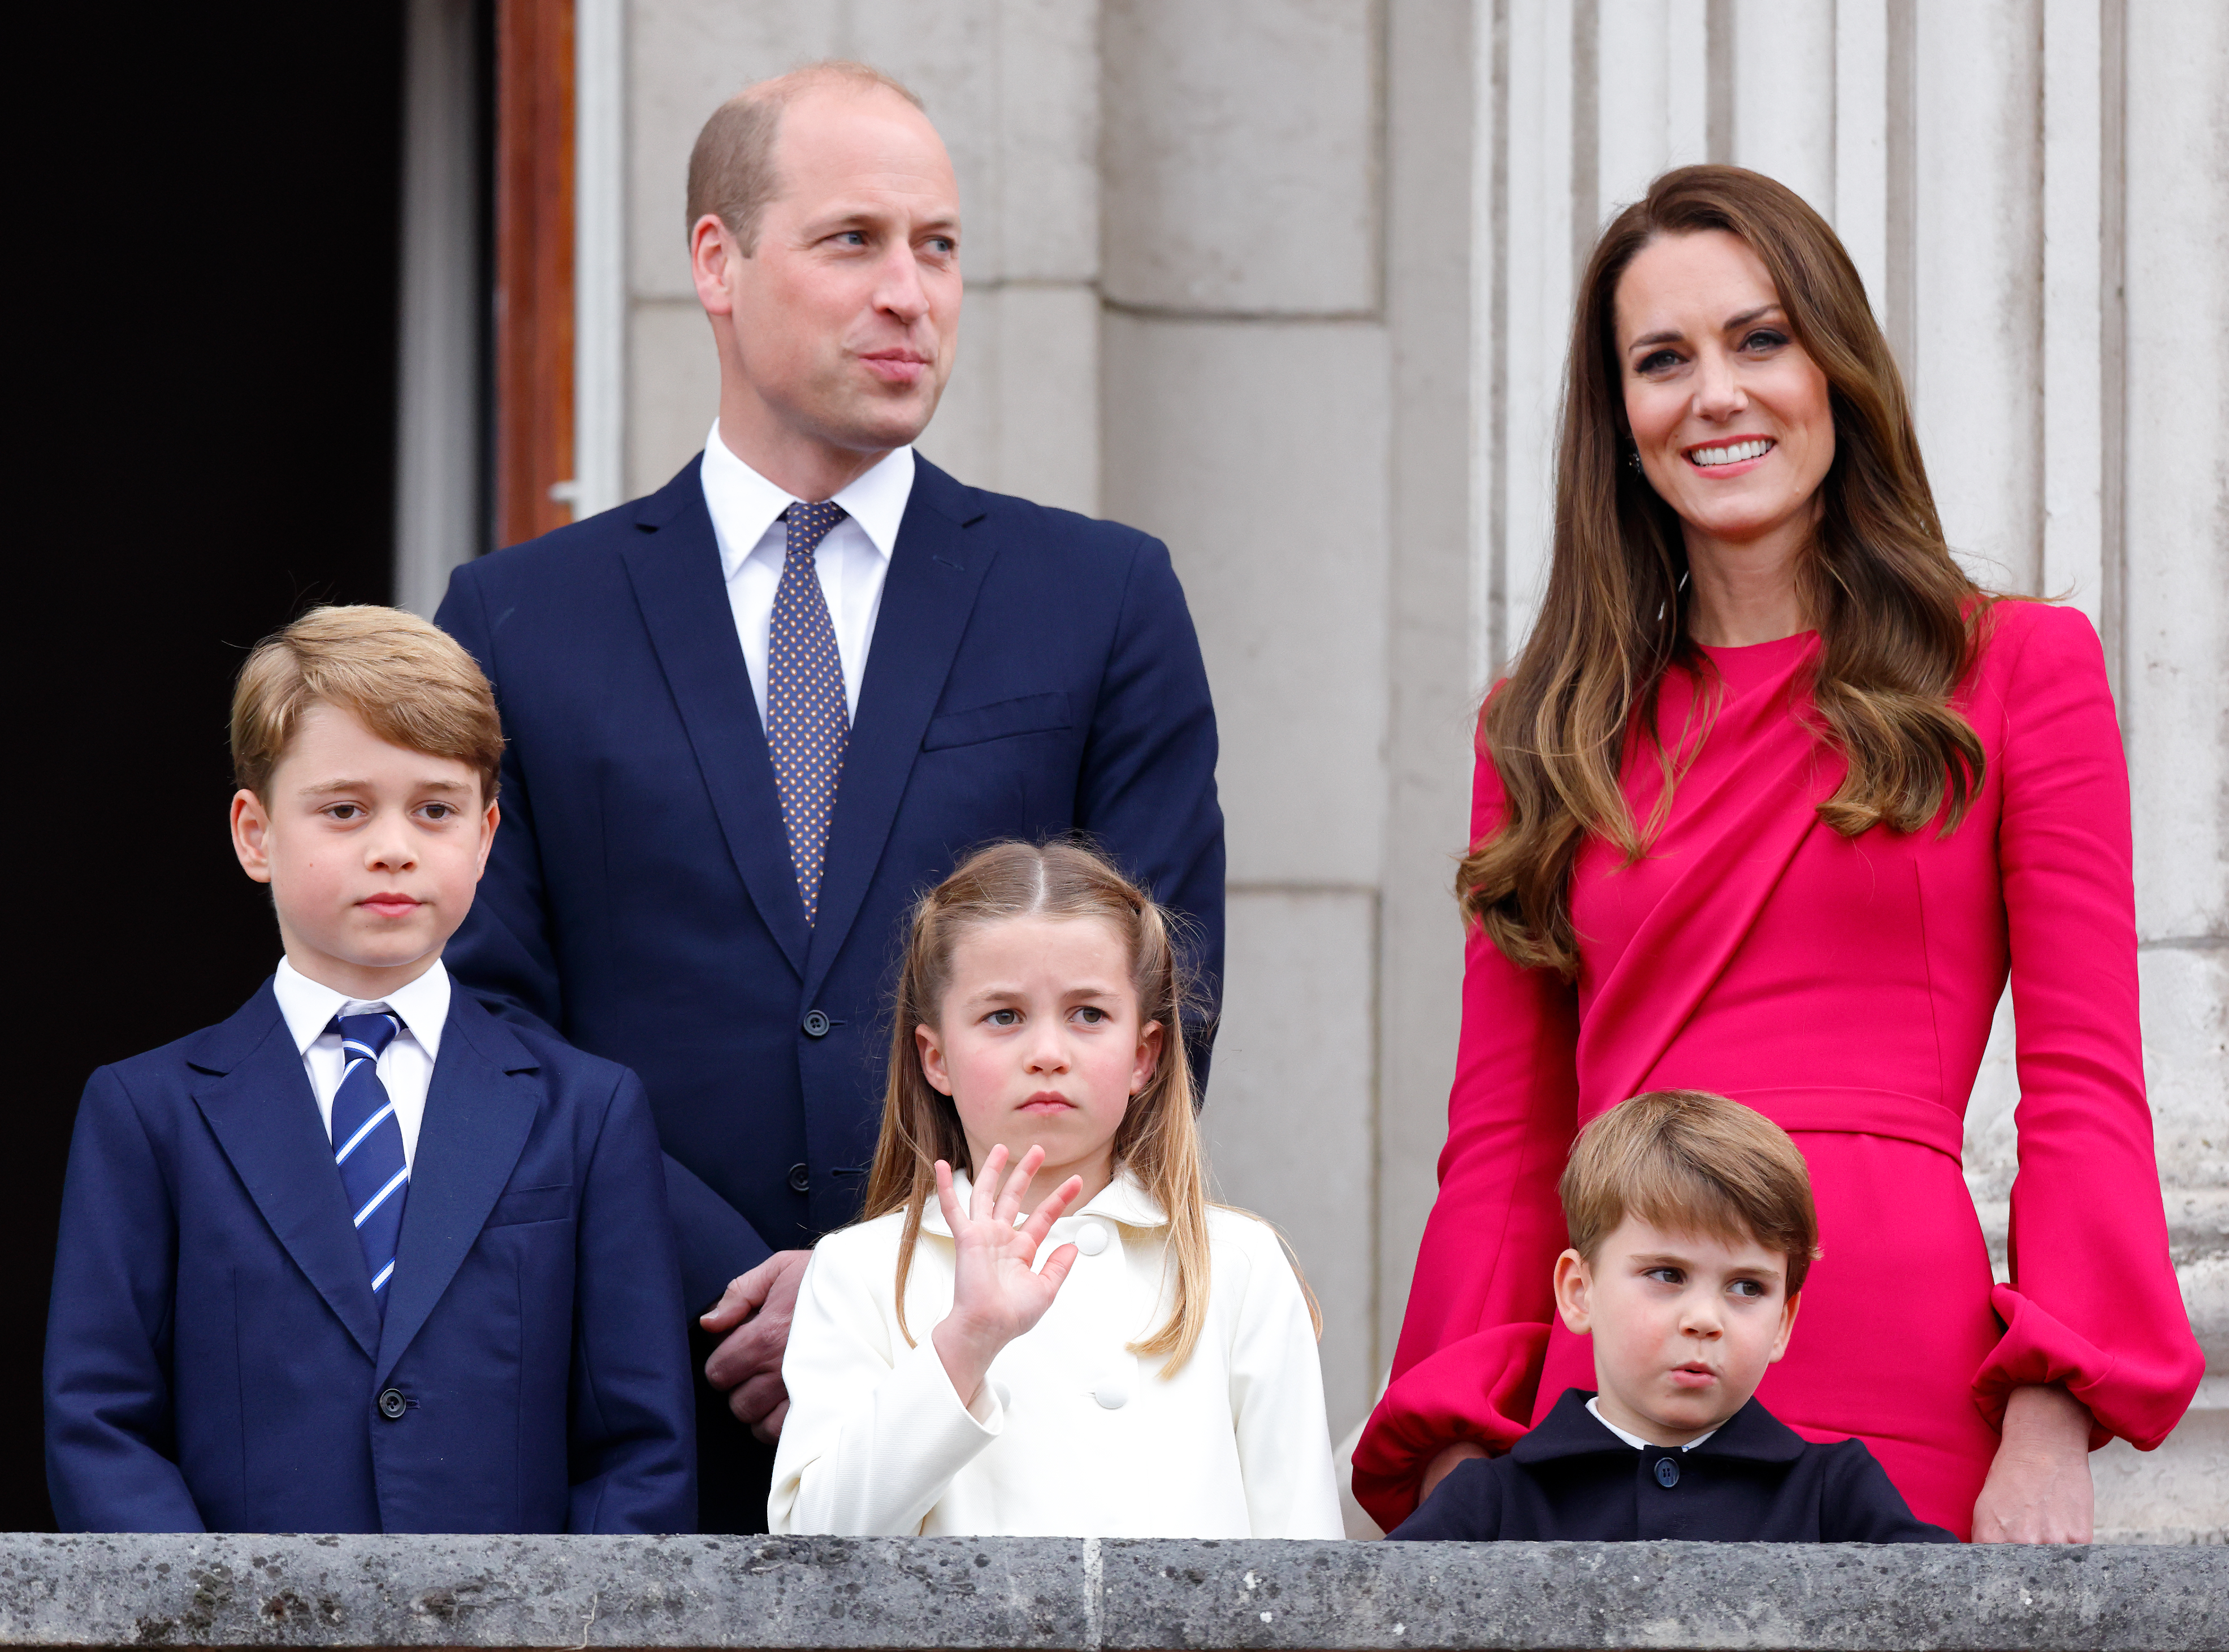 Кейт миддлтон фотошоп с детьми. Кейт Миддлтон и принц. Принц Уильям и Кейт Миддлтон. Принц Джордж Кембриджский 2022. Кейт Миддлтон Уильям и принц Уильям.